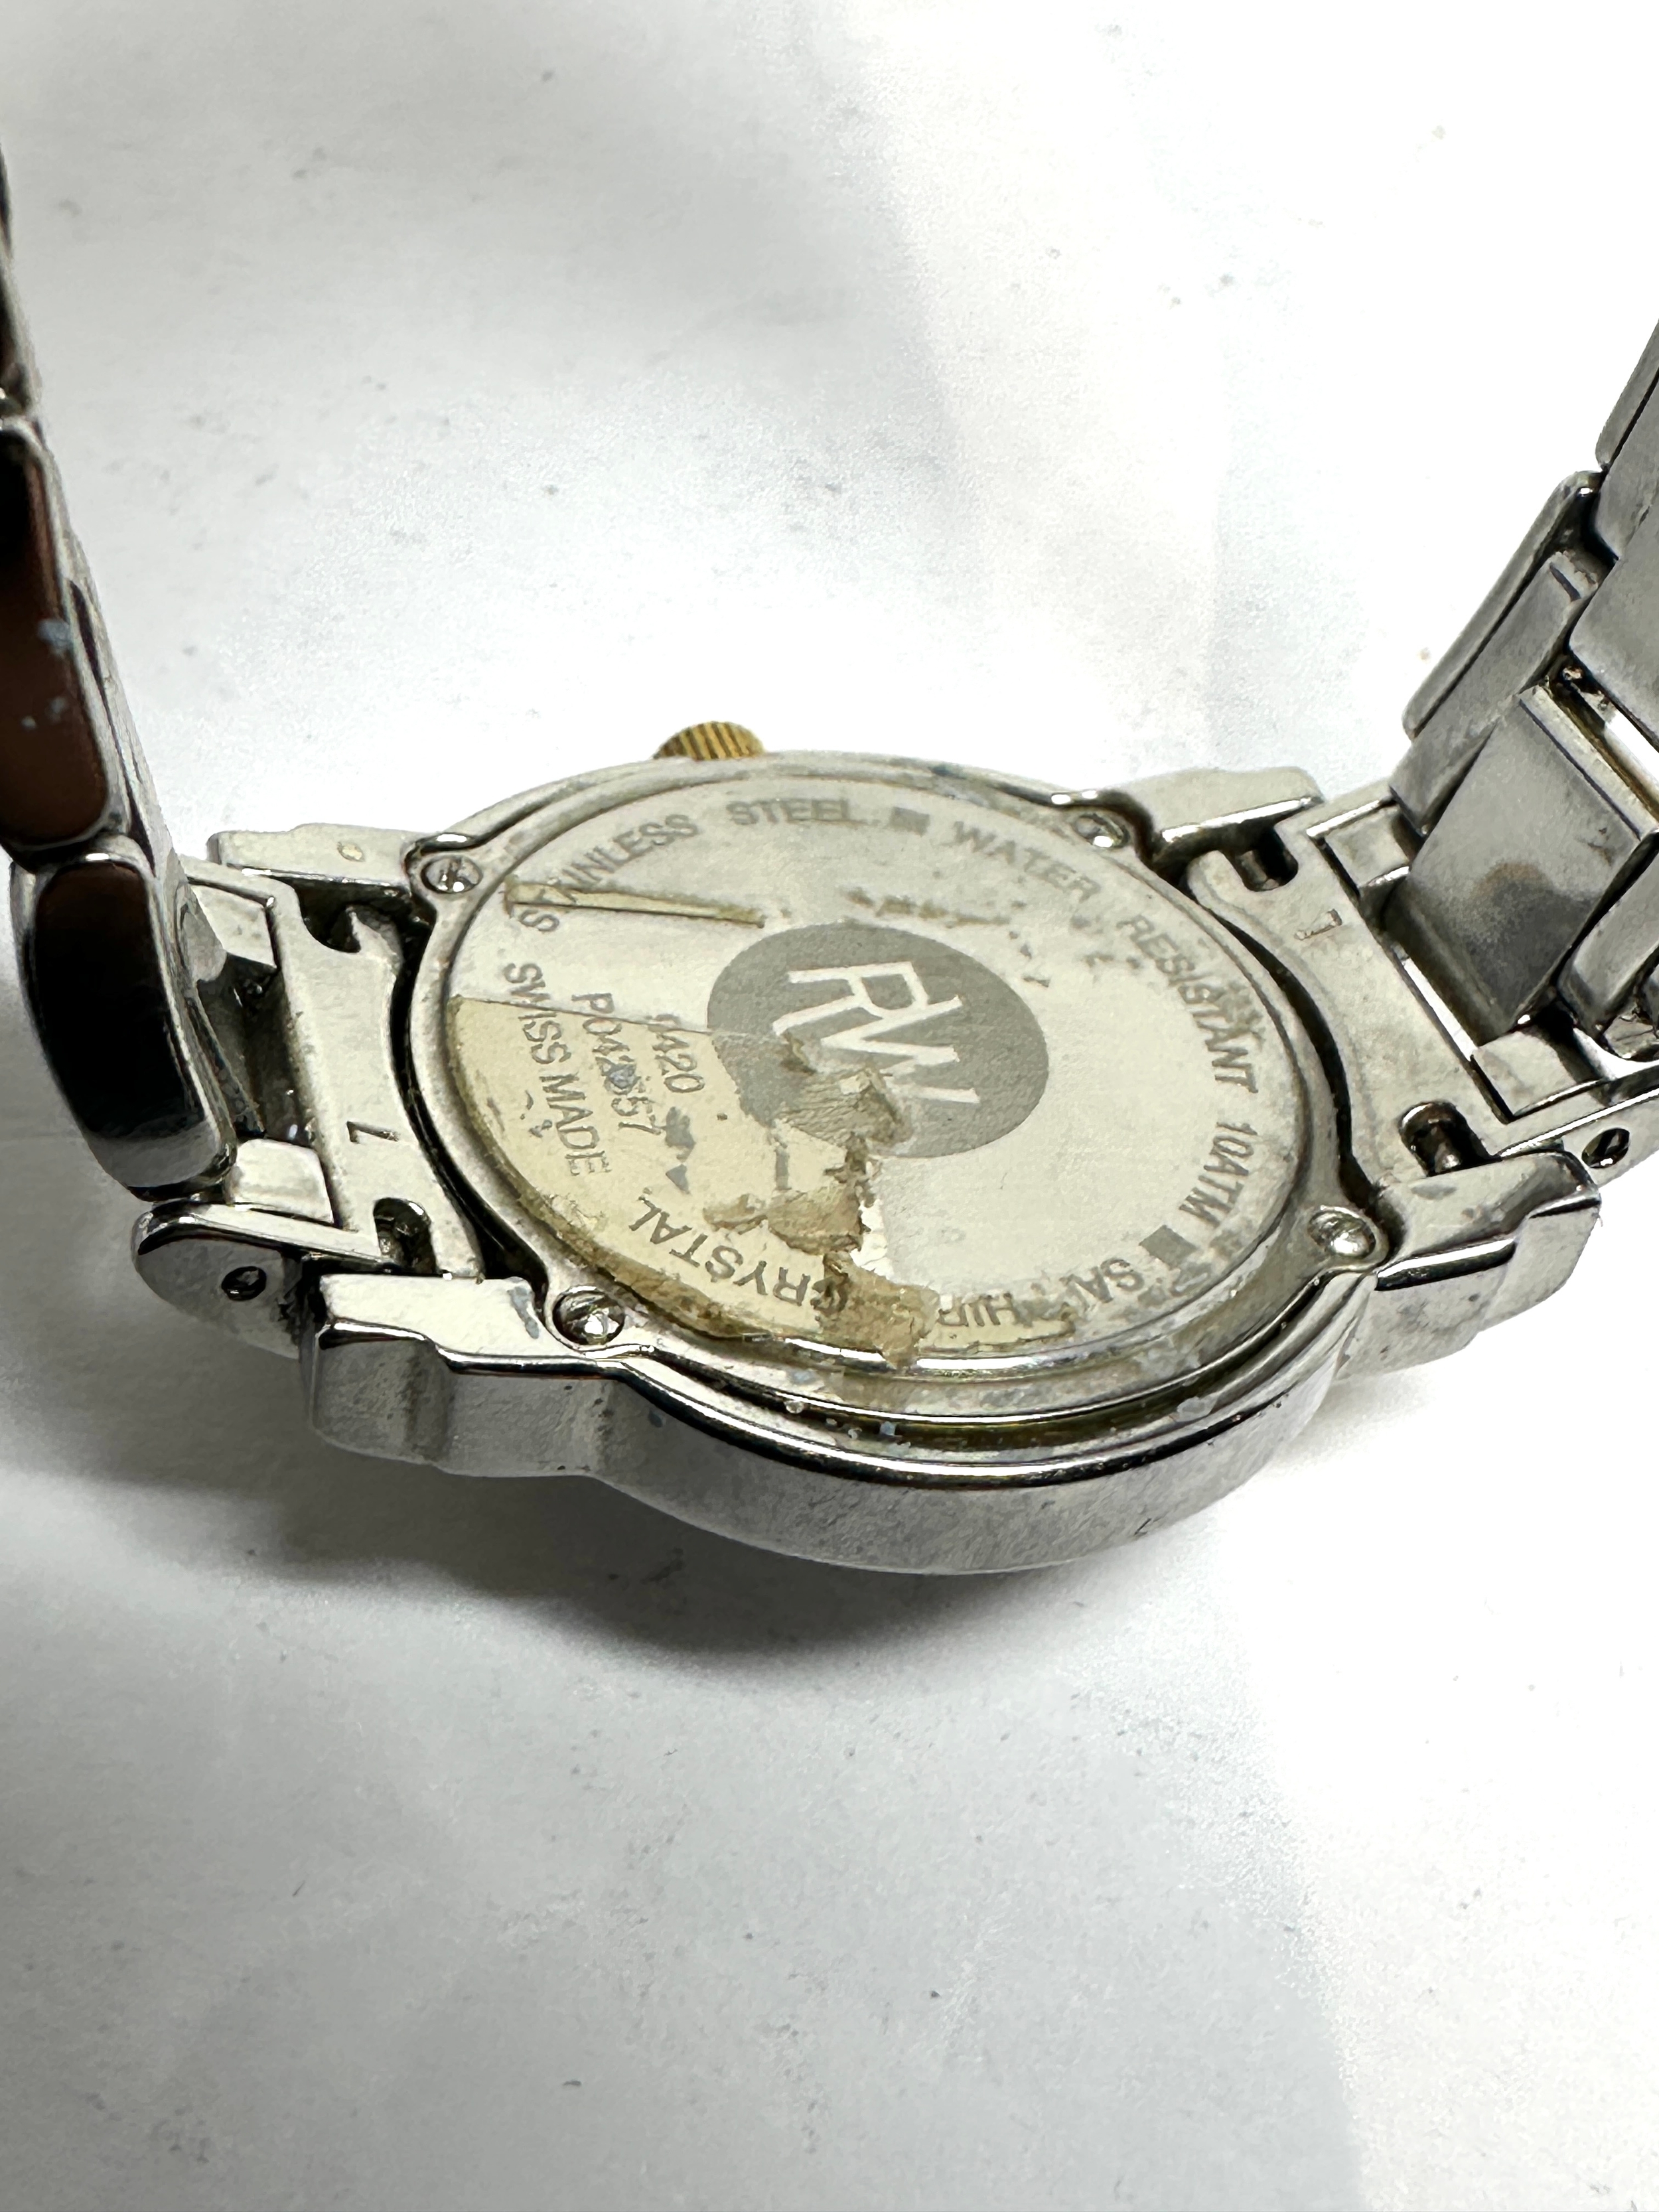 Raymond Weil Genève Saxo 9420 Date Ladies Quartz wristwatch the watch is working - Image 4 of 4